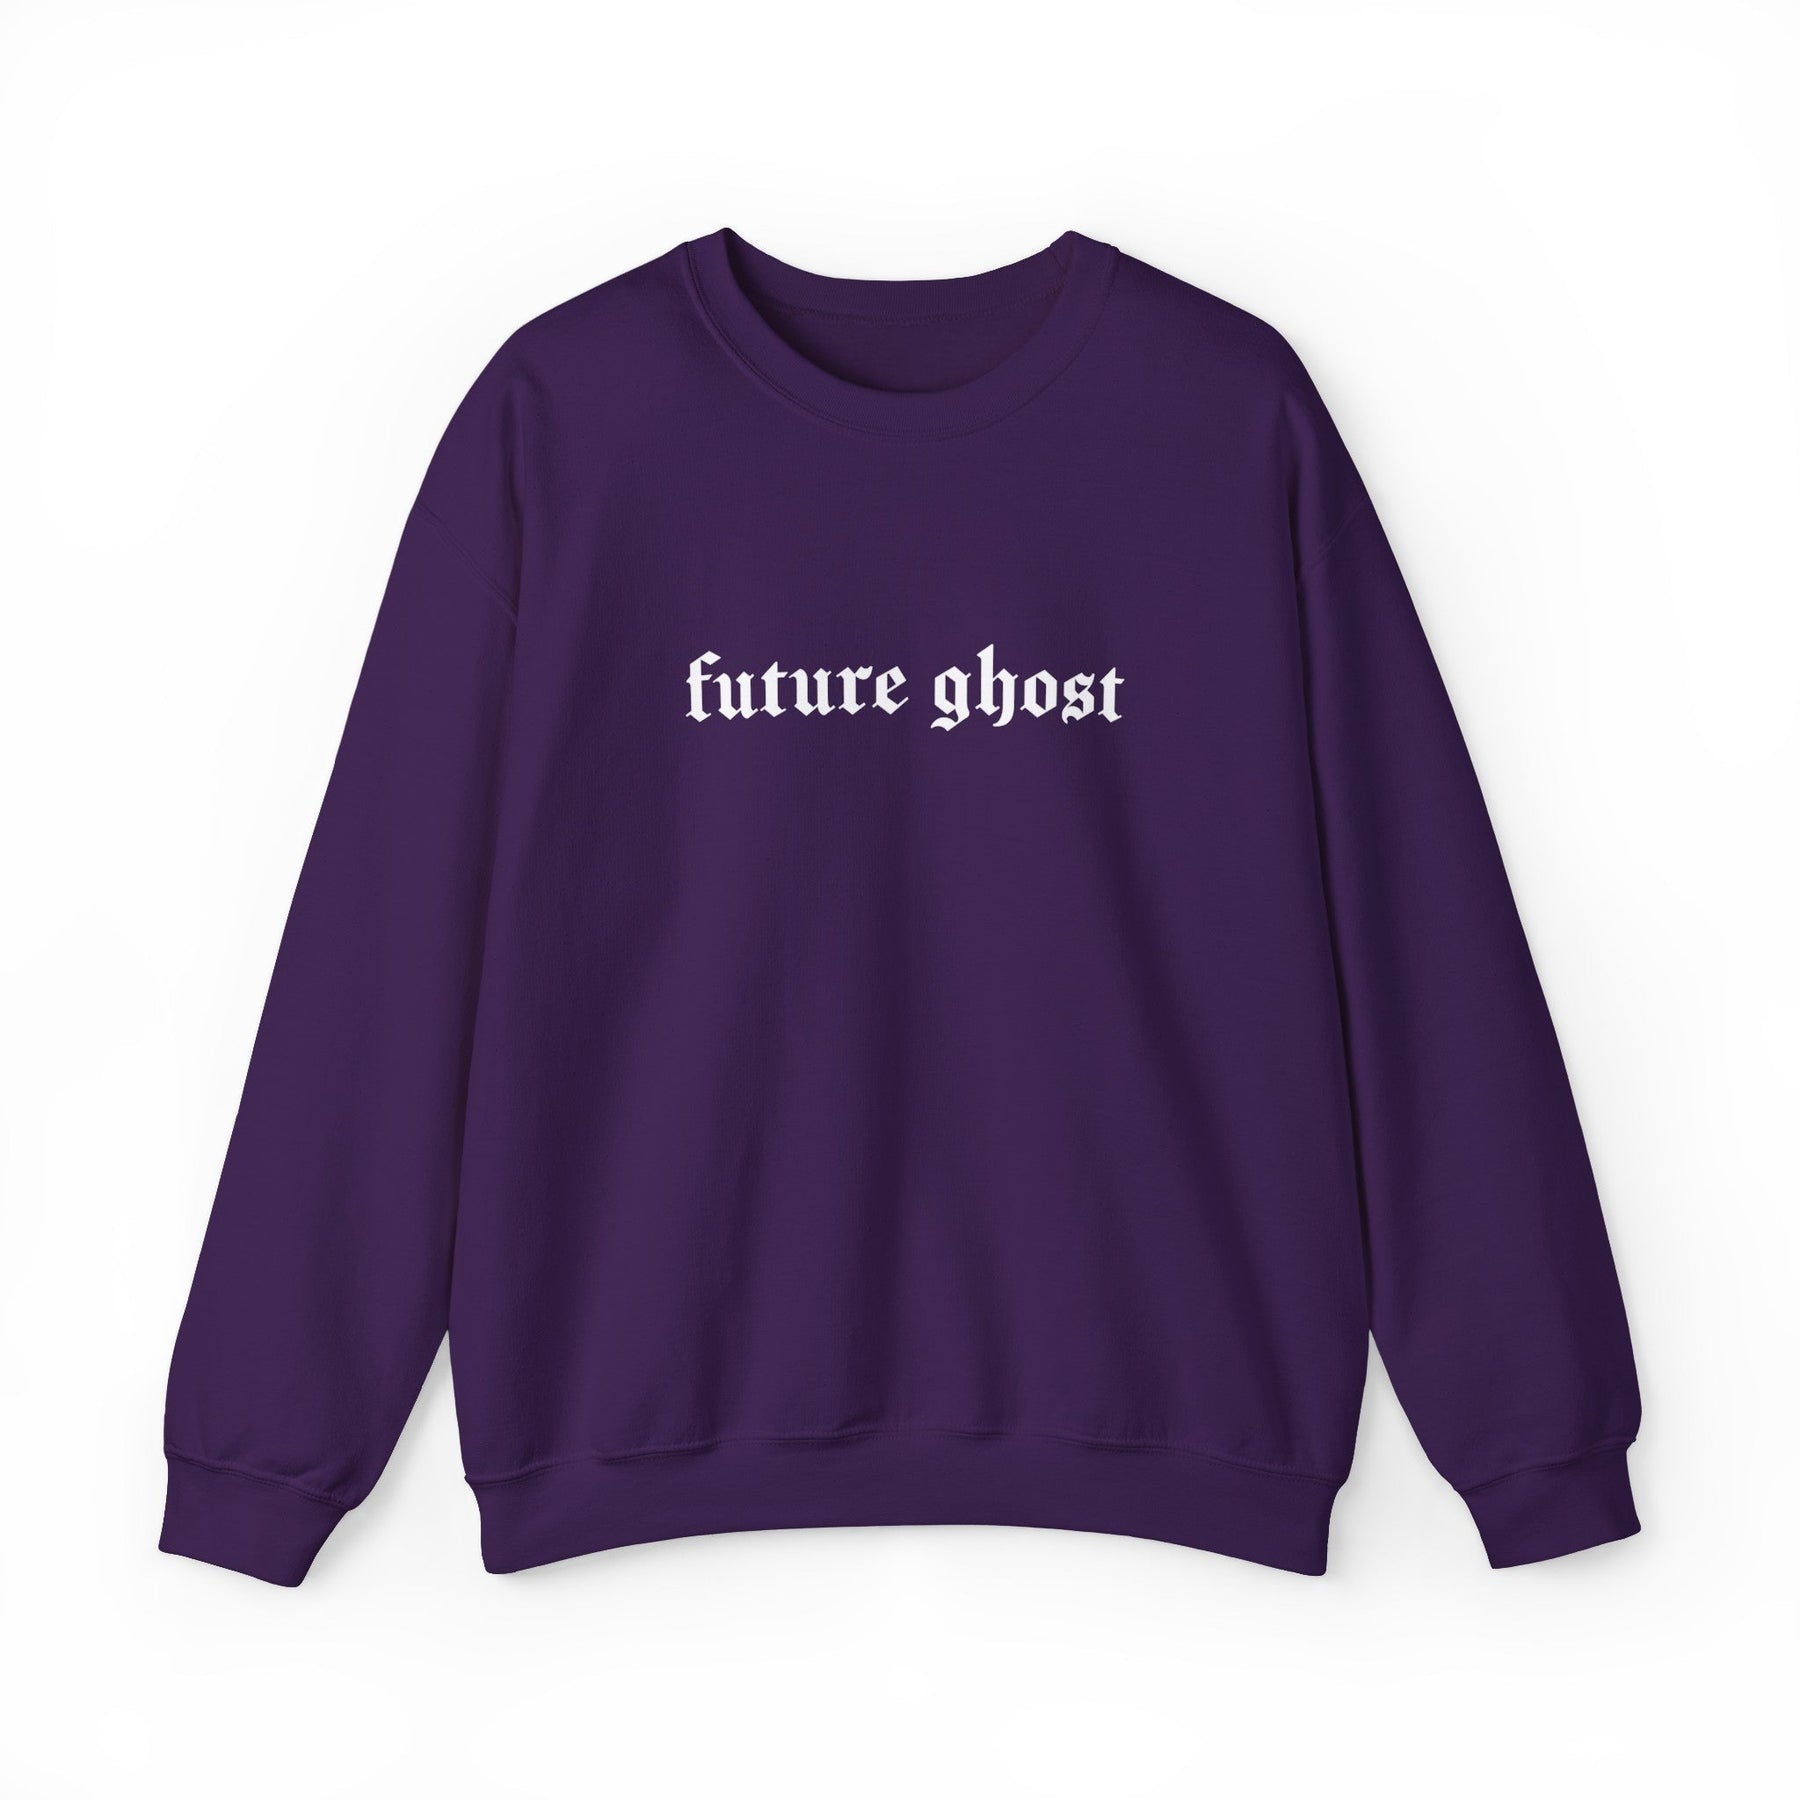 Future Ghost Long Sleeve Crew Neck Sweatshirt - Goth Cloth Co.Sweatshirt14435036406124630646